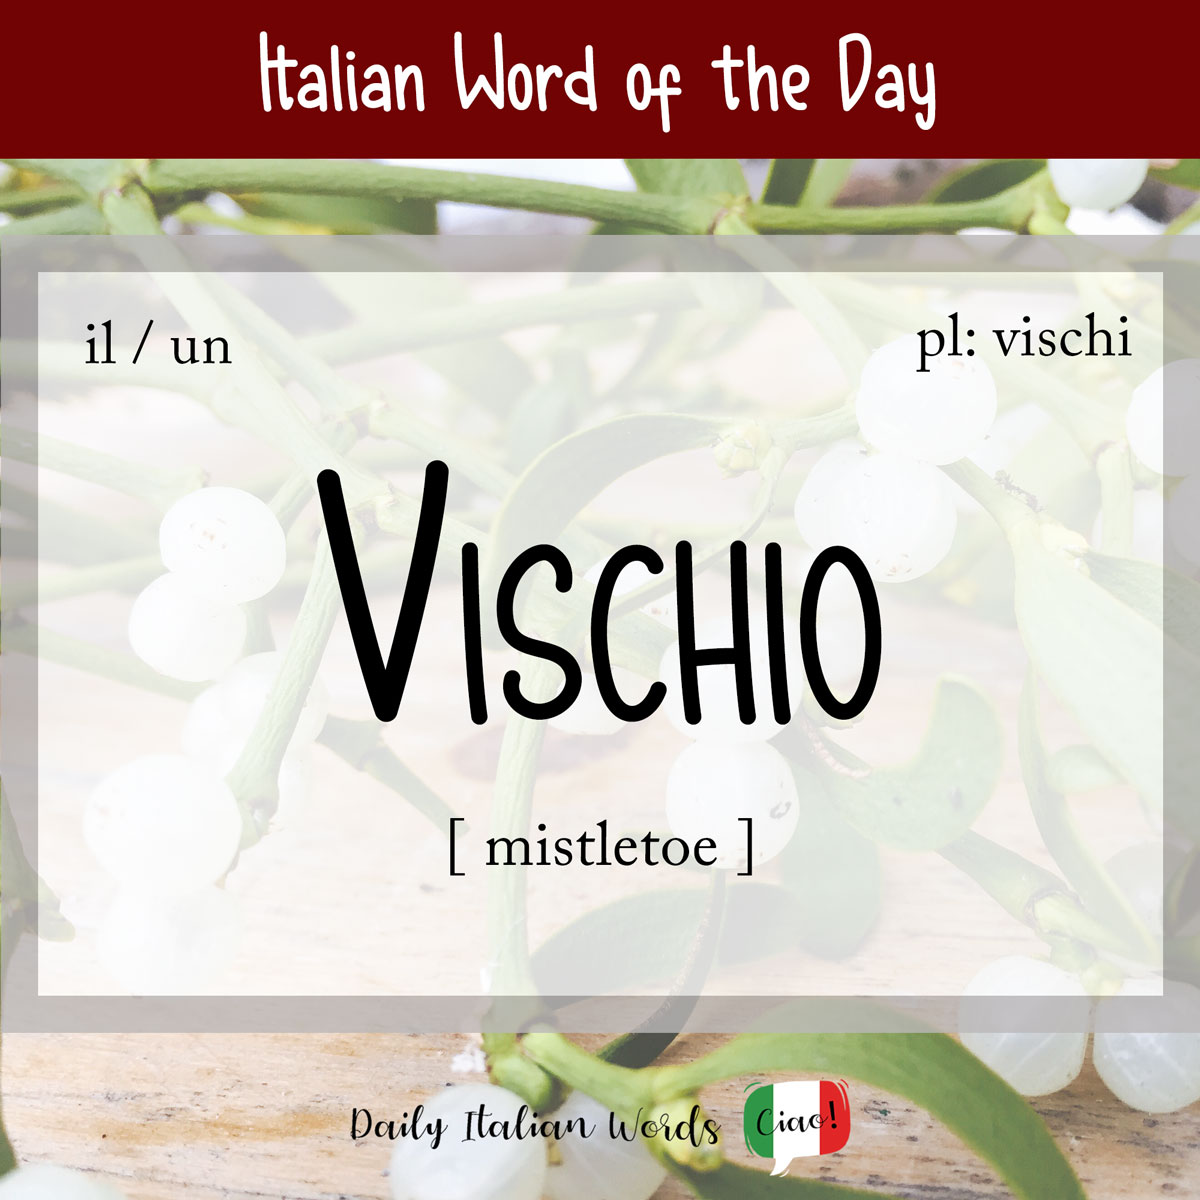 Italian Phrase of the Day: Vischio (mistletoe)